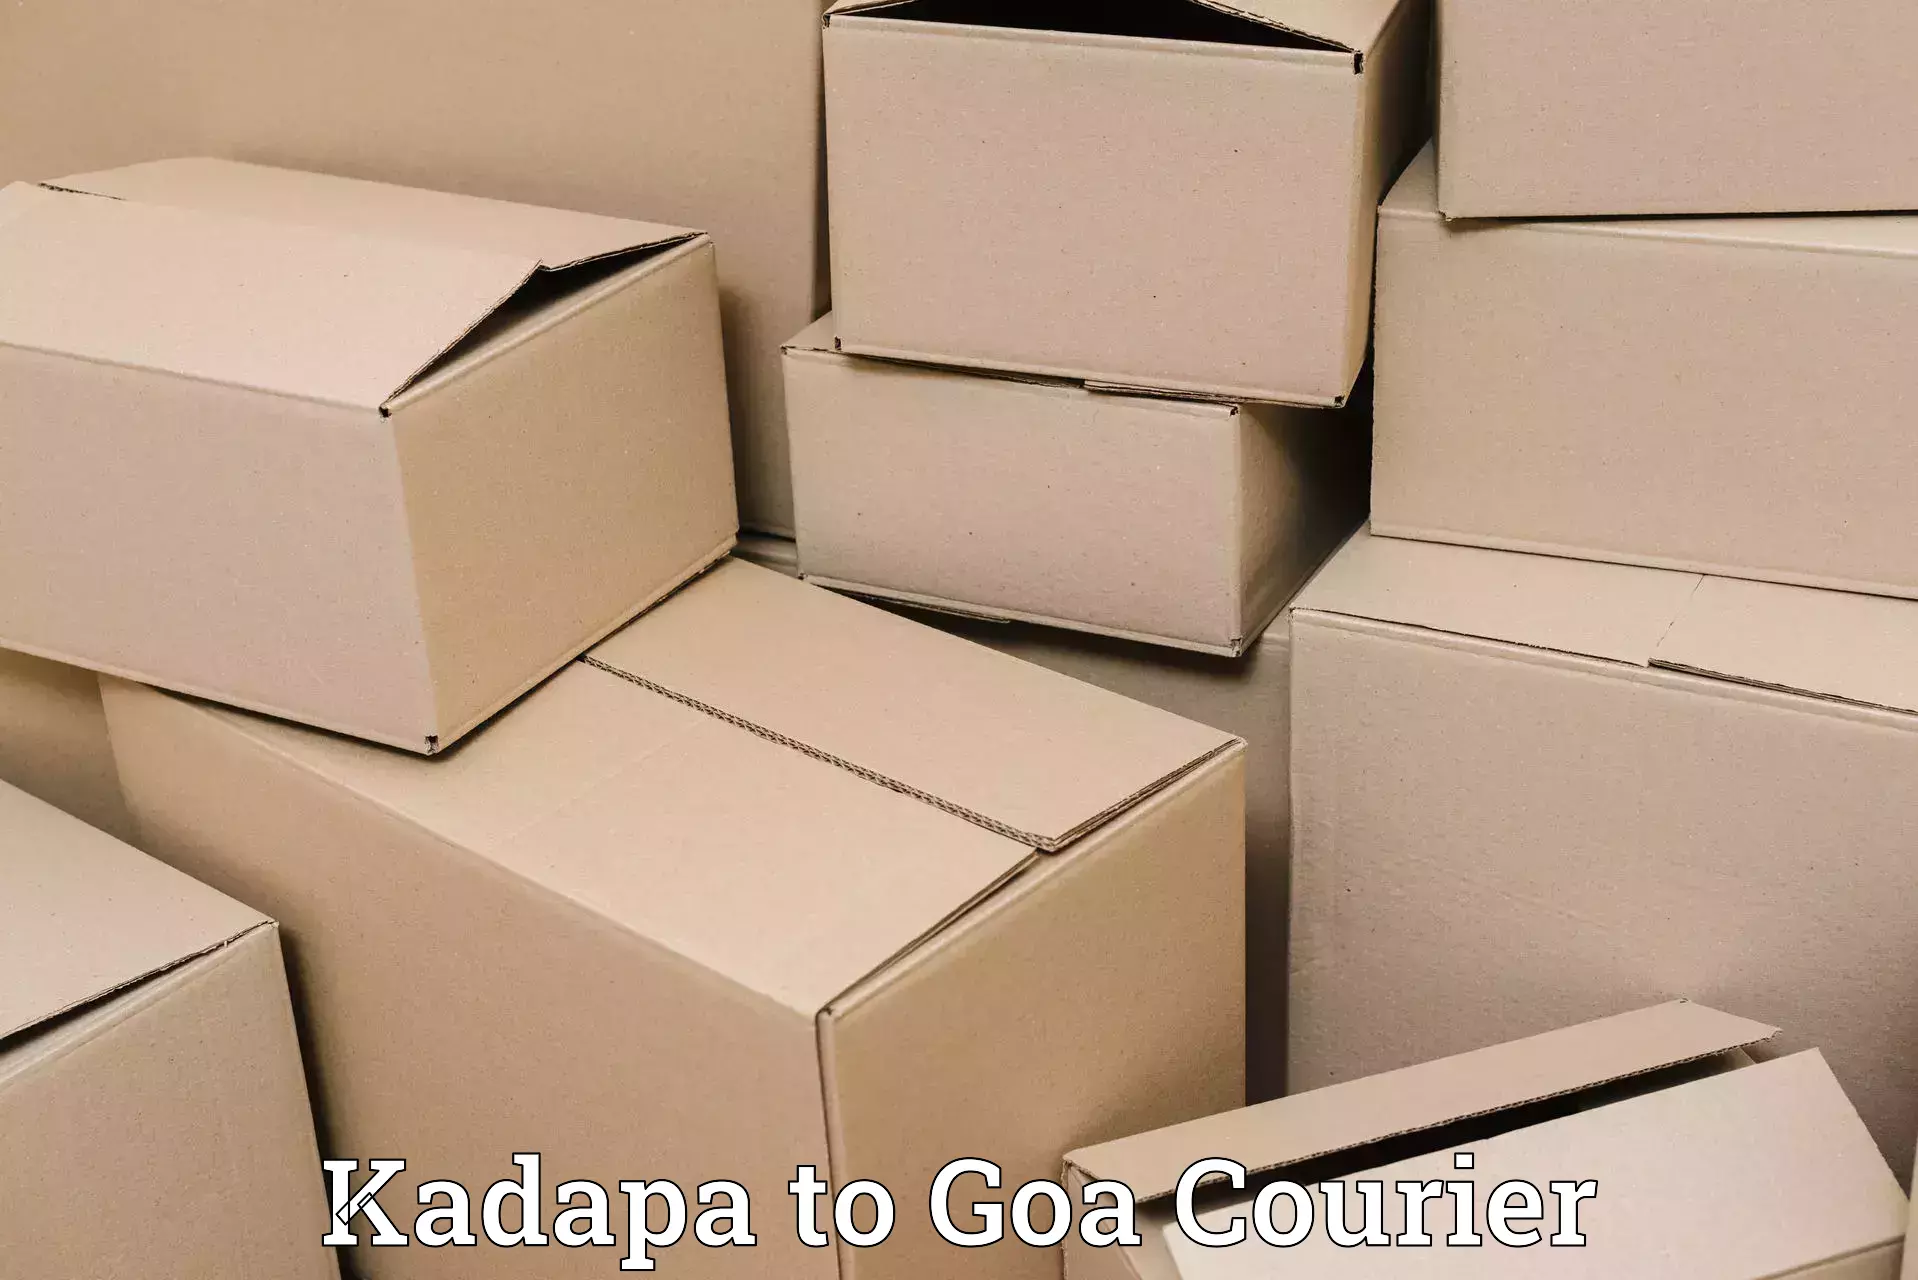 Express delivery network Kadapa to South Goa